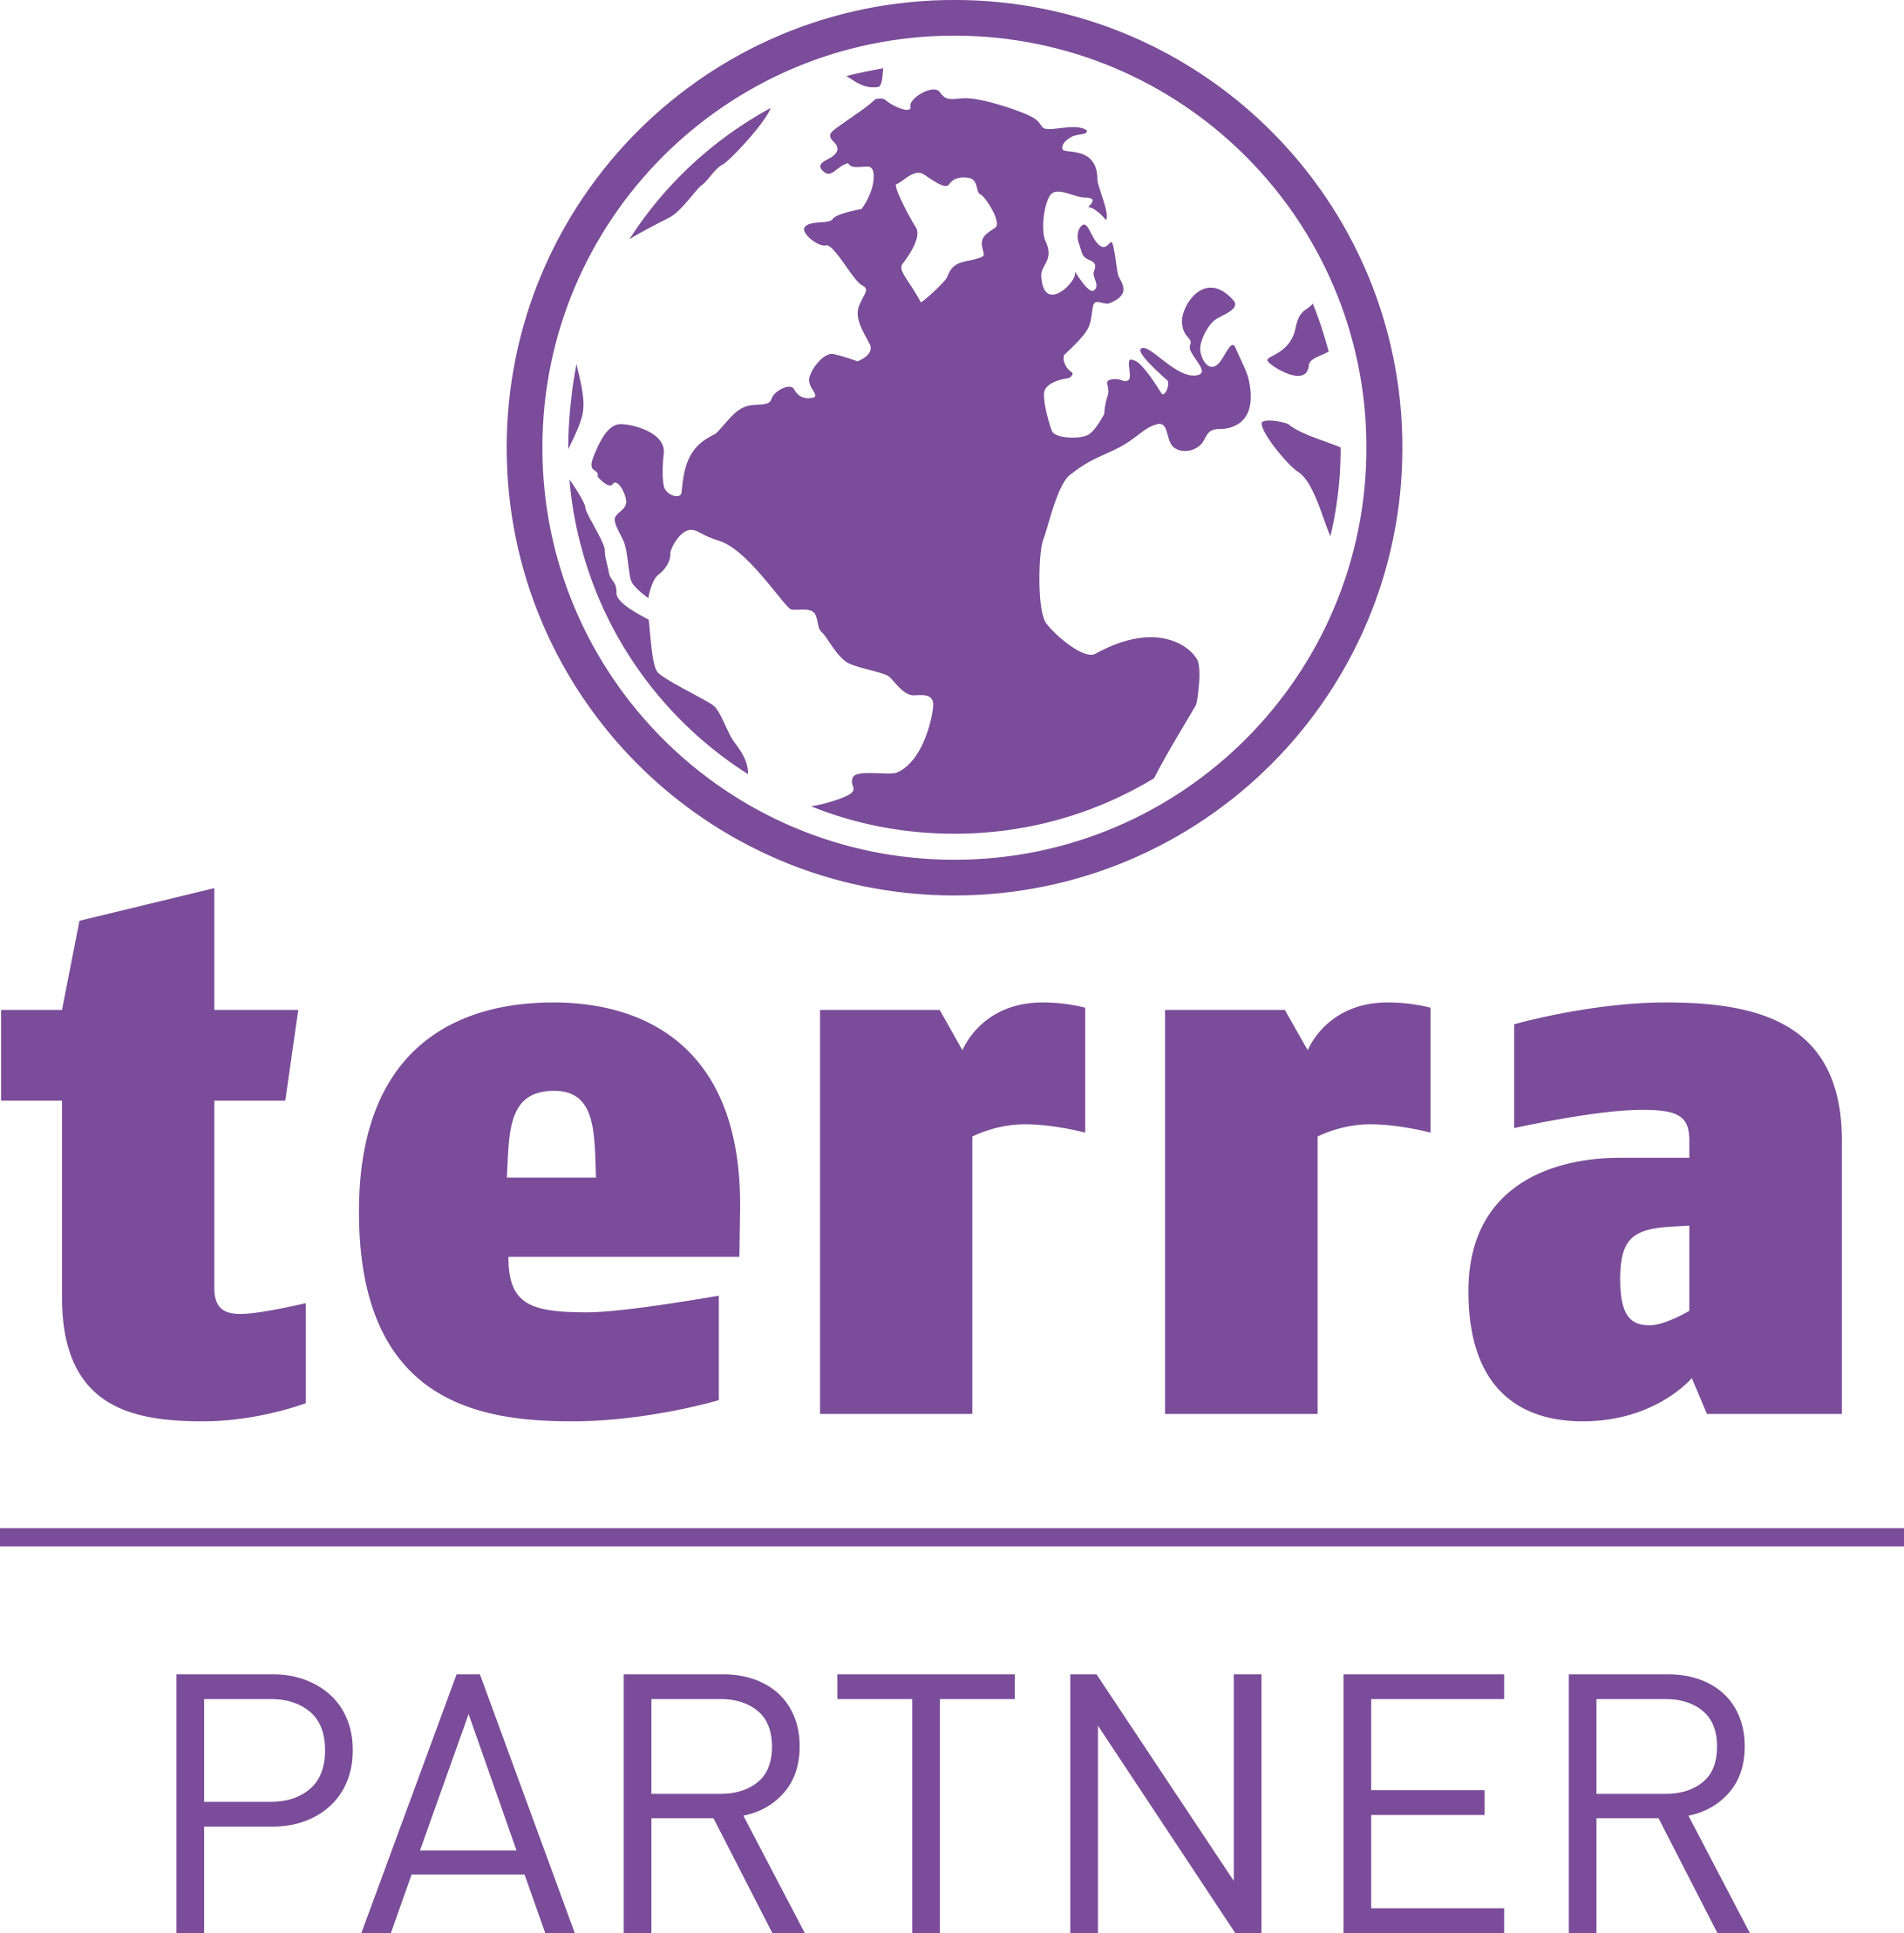 TERRA Partner